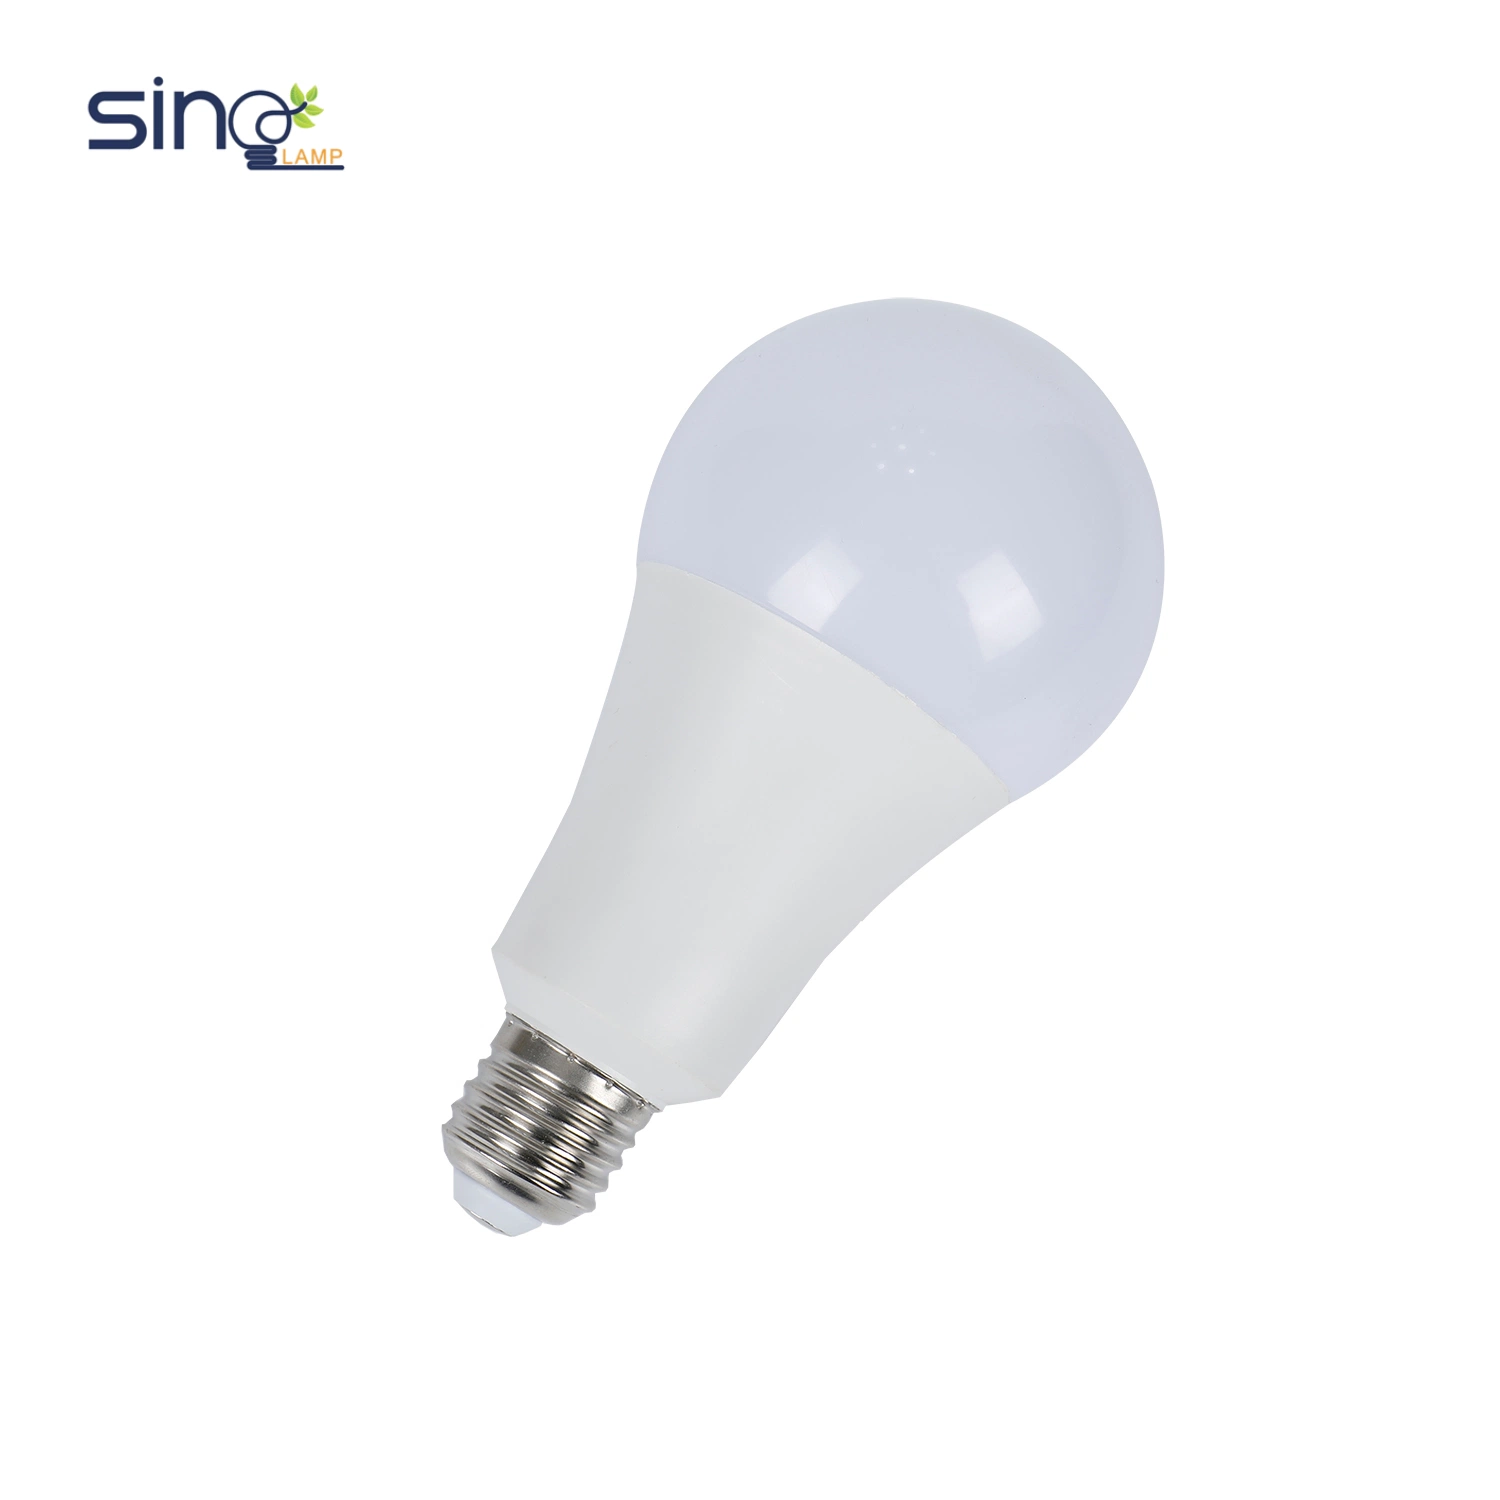 A60 LED Bulb Light E27/B22 Base 9W 100-240V Ce RoHS GS Energy Saving Lamp